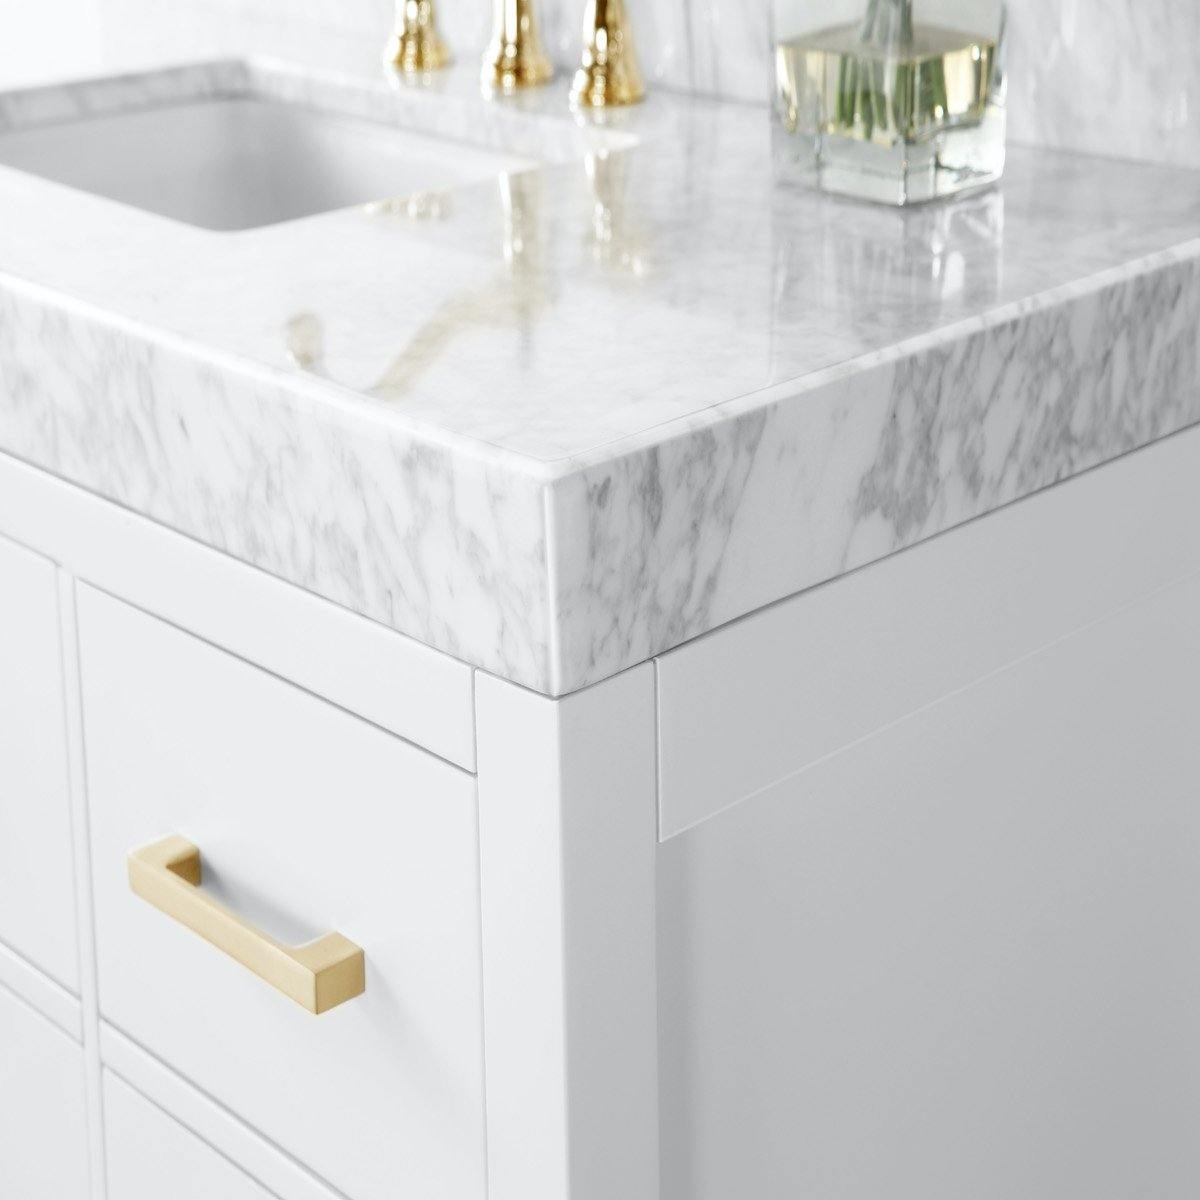 Ancerre Designs Elizabeth 48 Inch White Single Vanity Counter